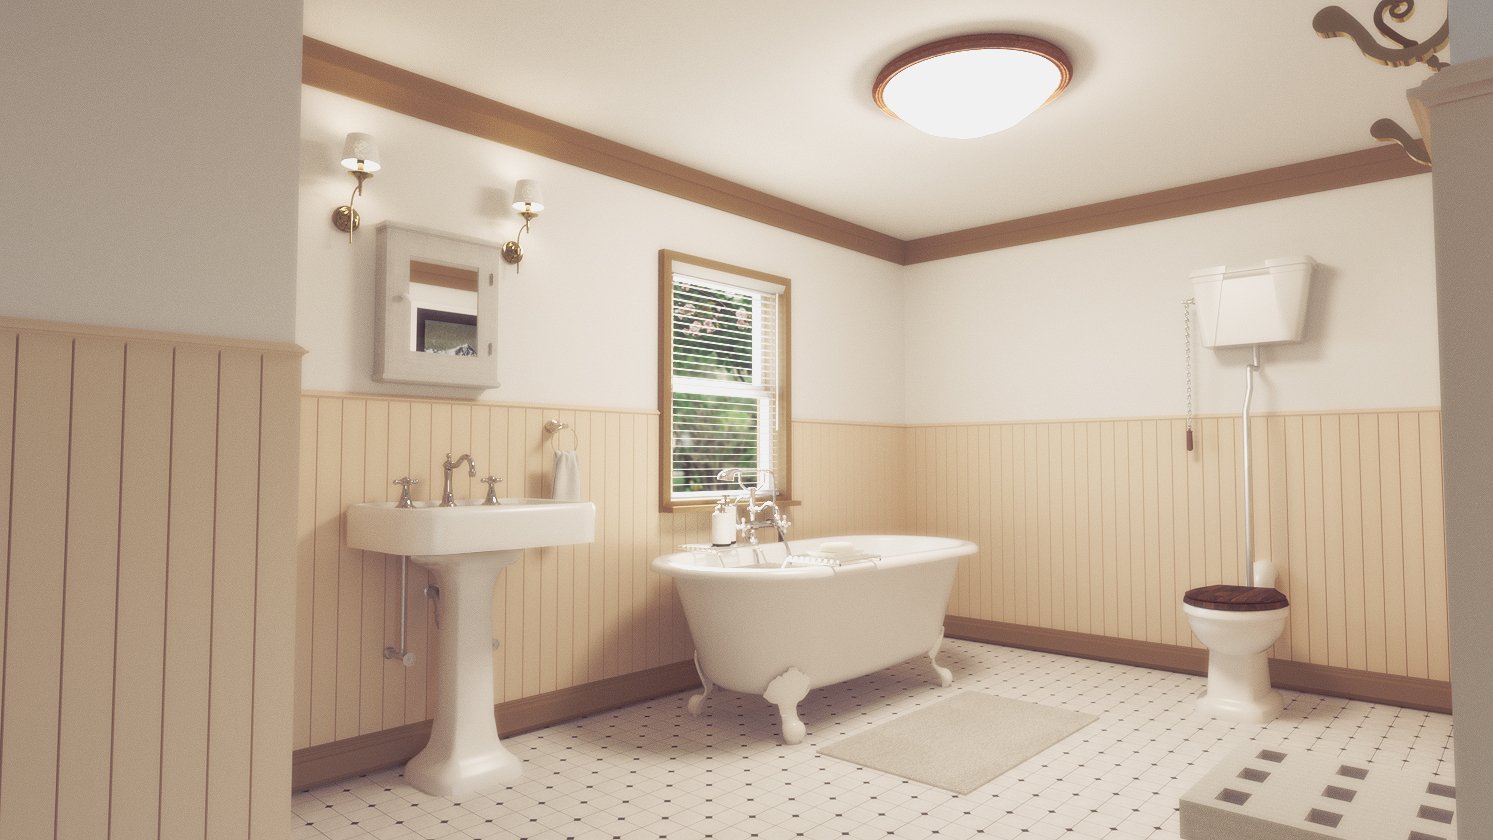 Vintage Bathroom by: Digitallab3D, 3D Models by Daz 3D